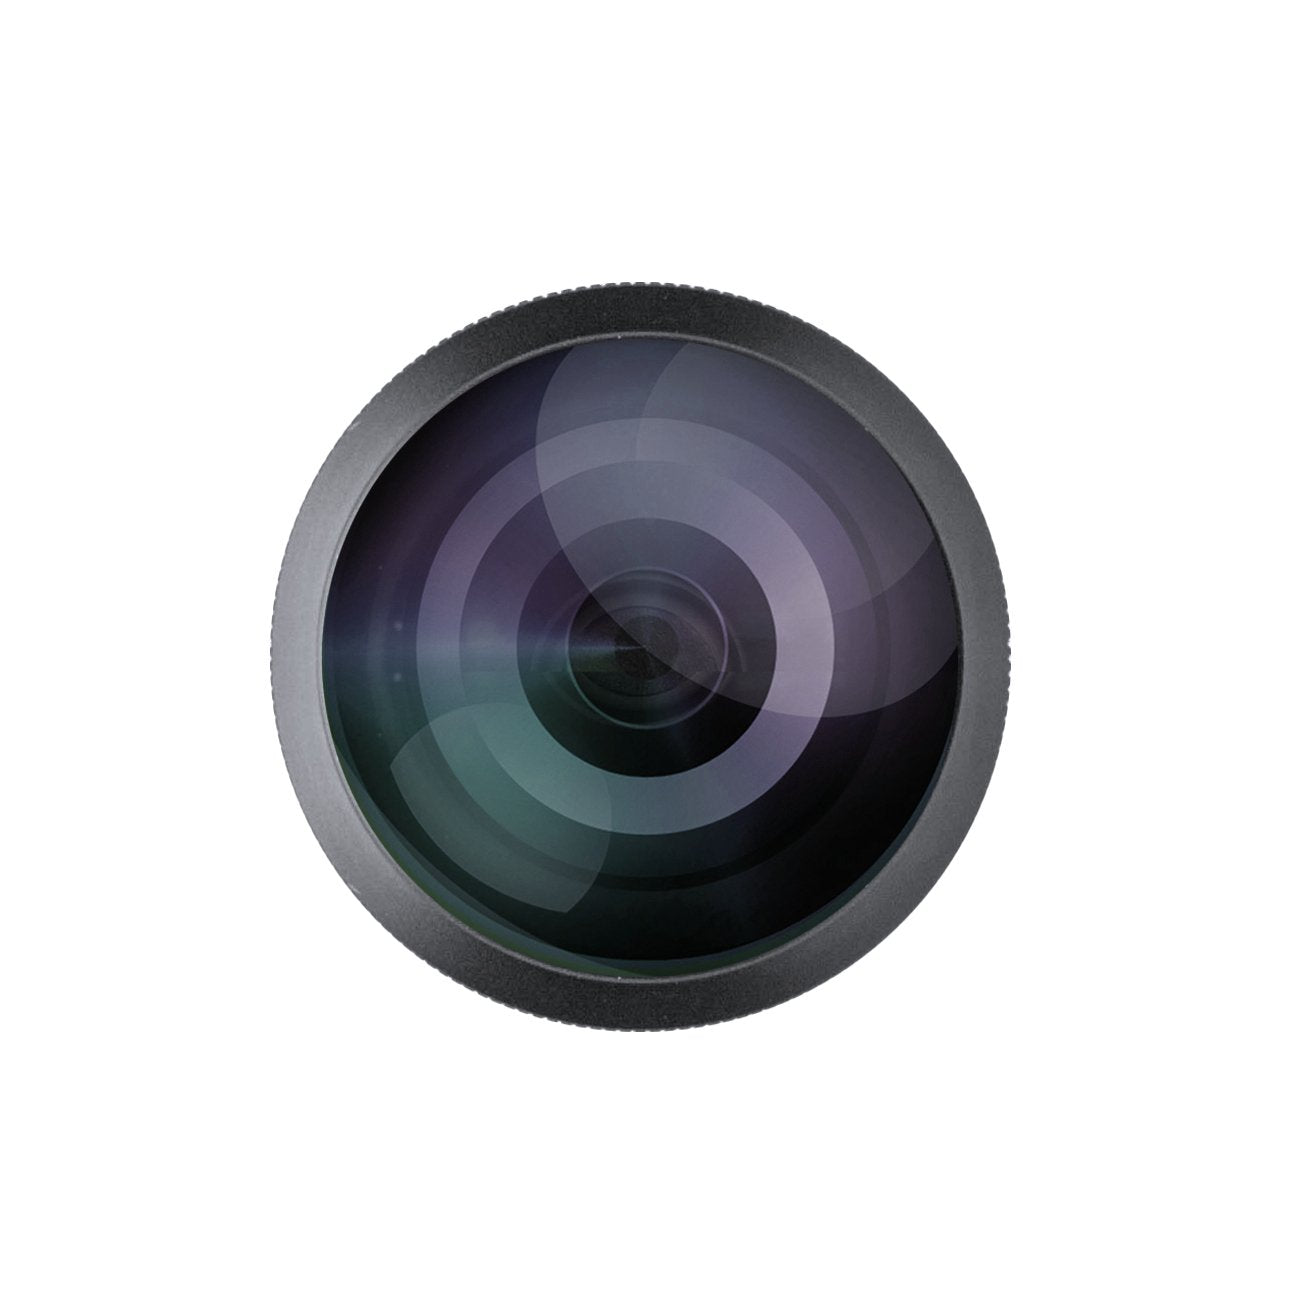 Fisheye Lens Edition - iPhone 7 - SANDMARC